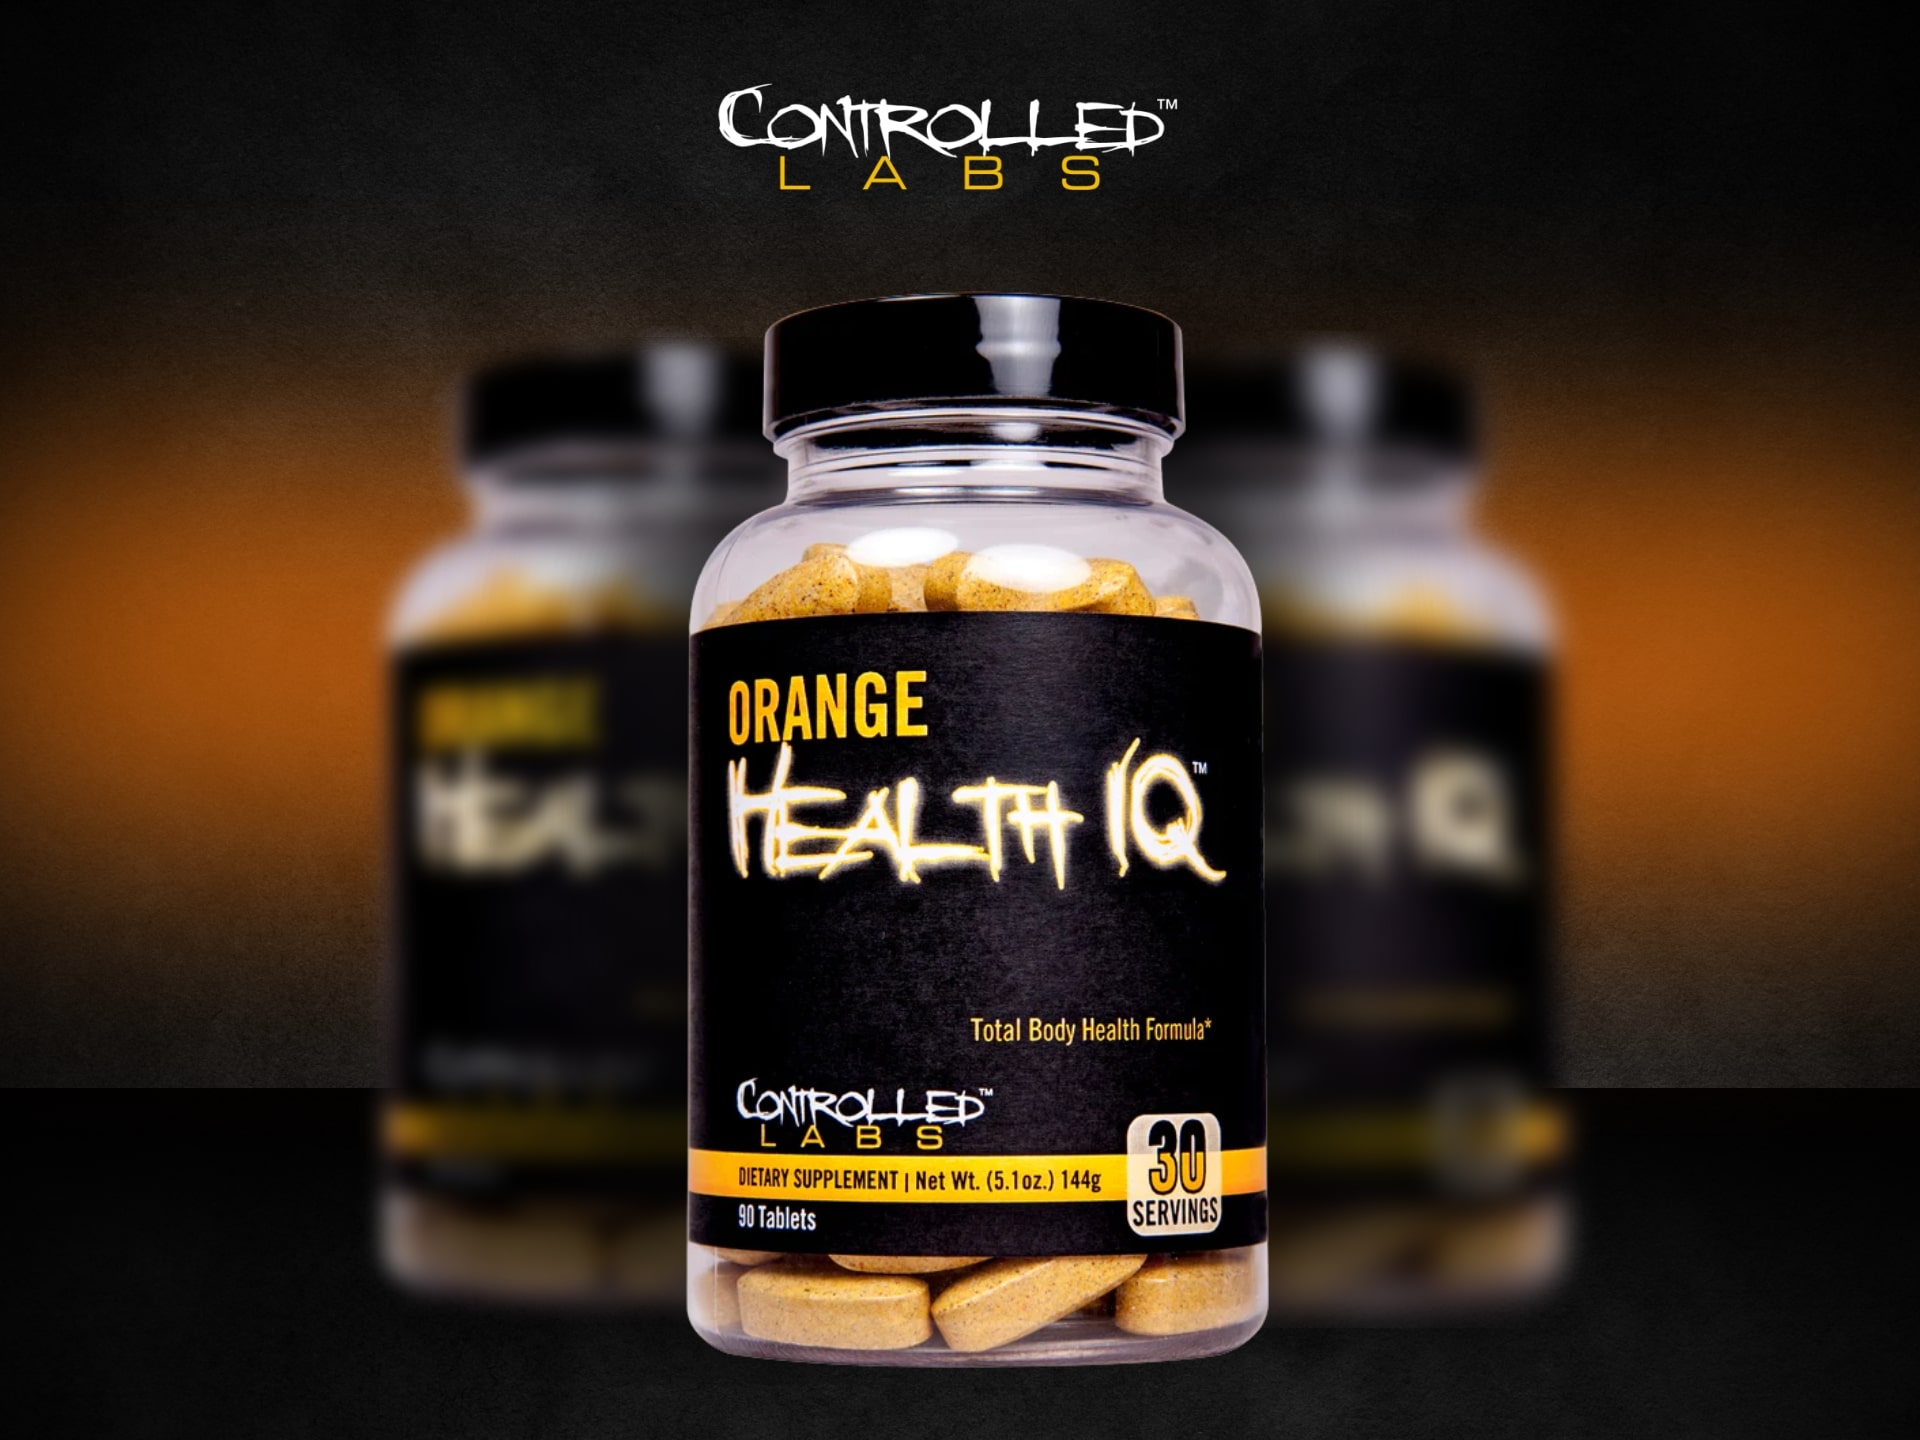 Controlled Labs Orange health iq